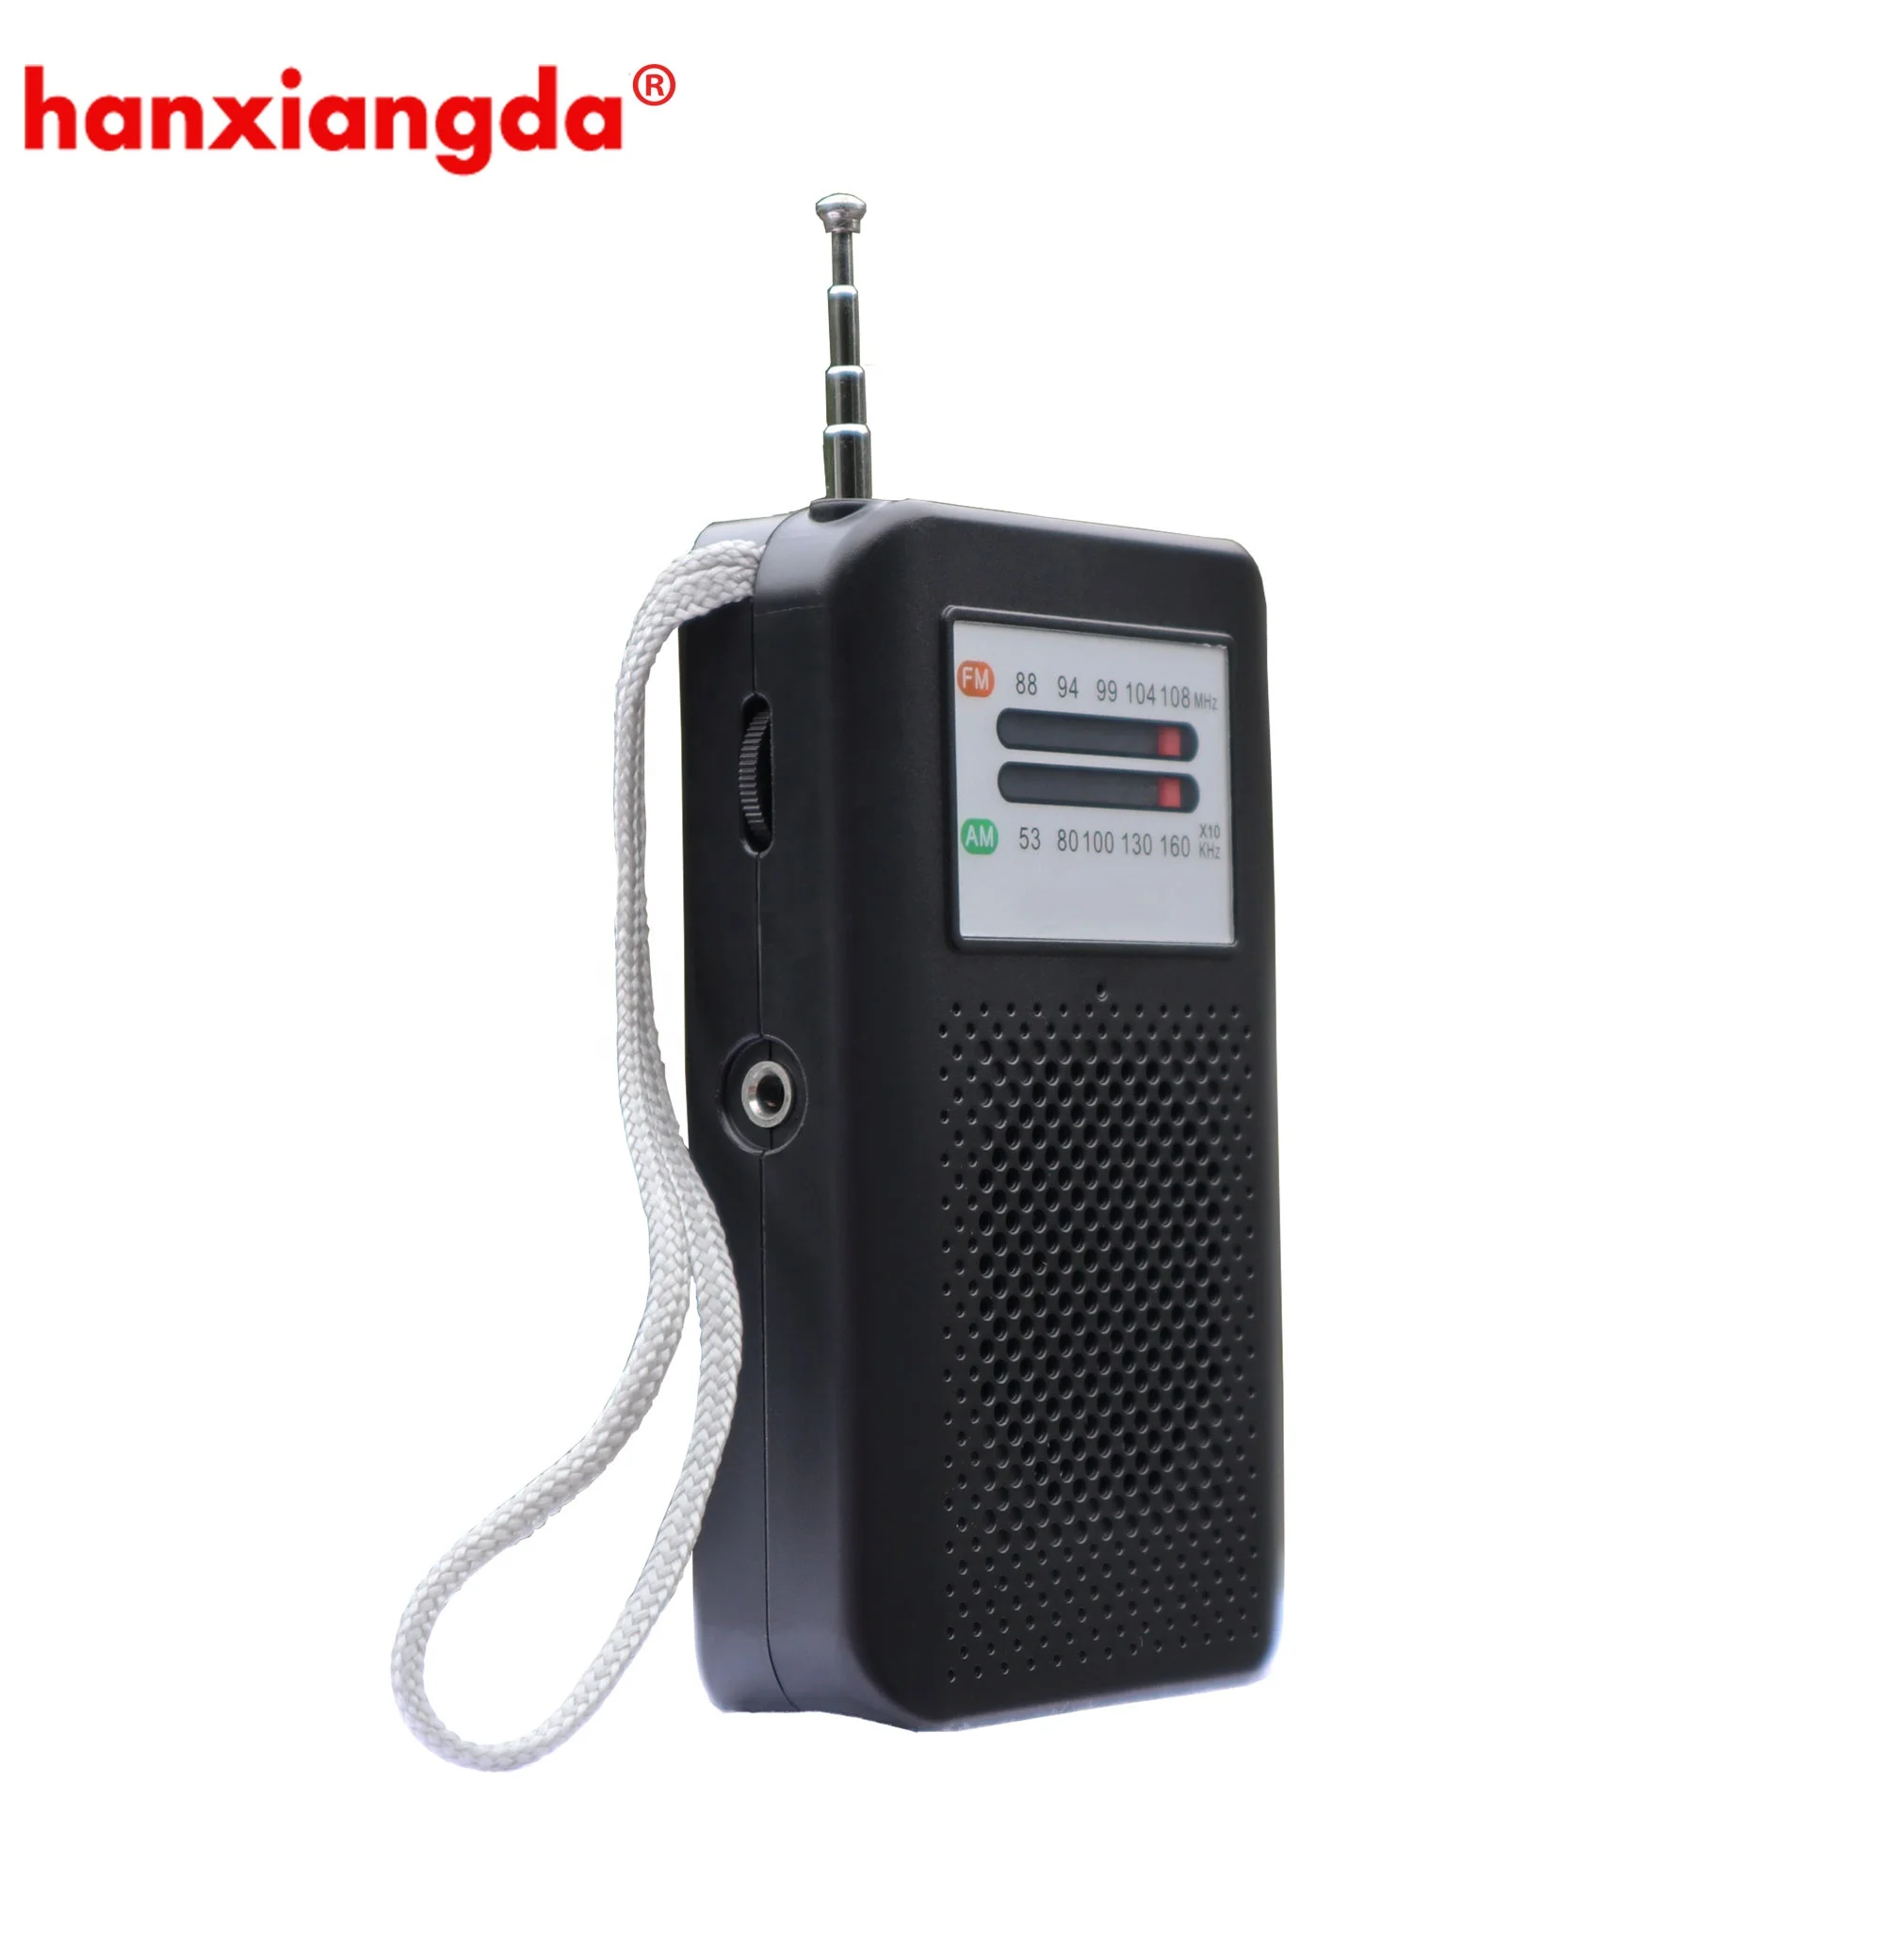 
Mini Portable pocket radio am fm receiver home radio 